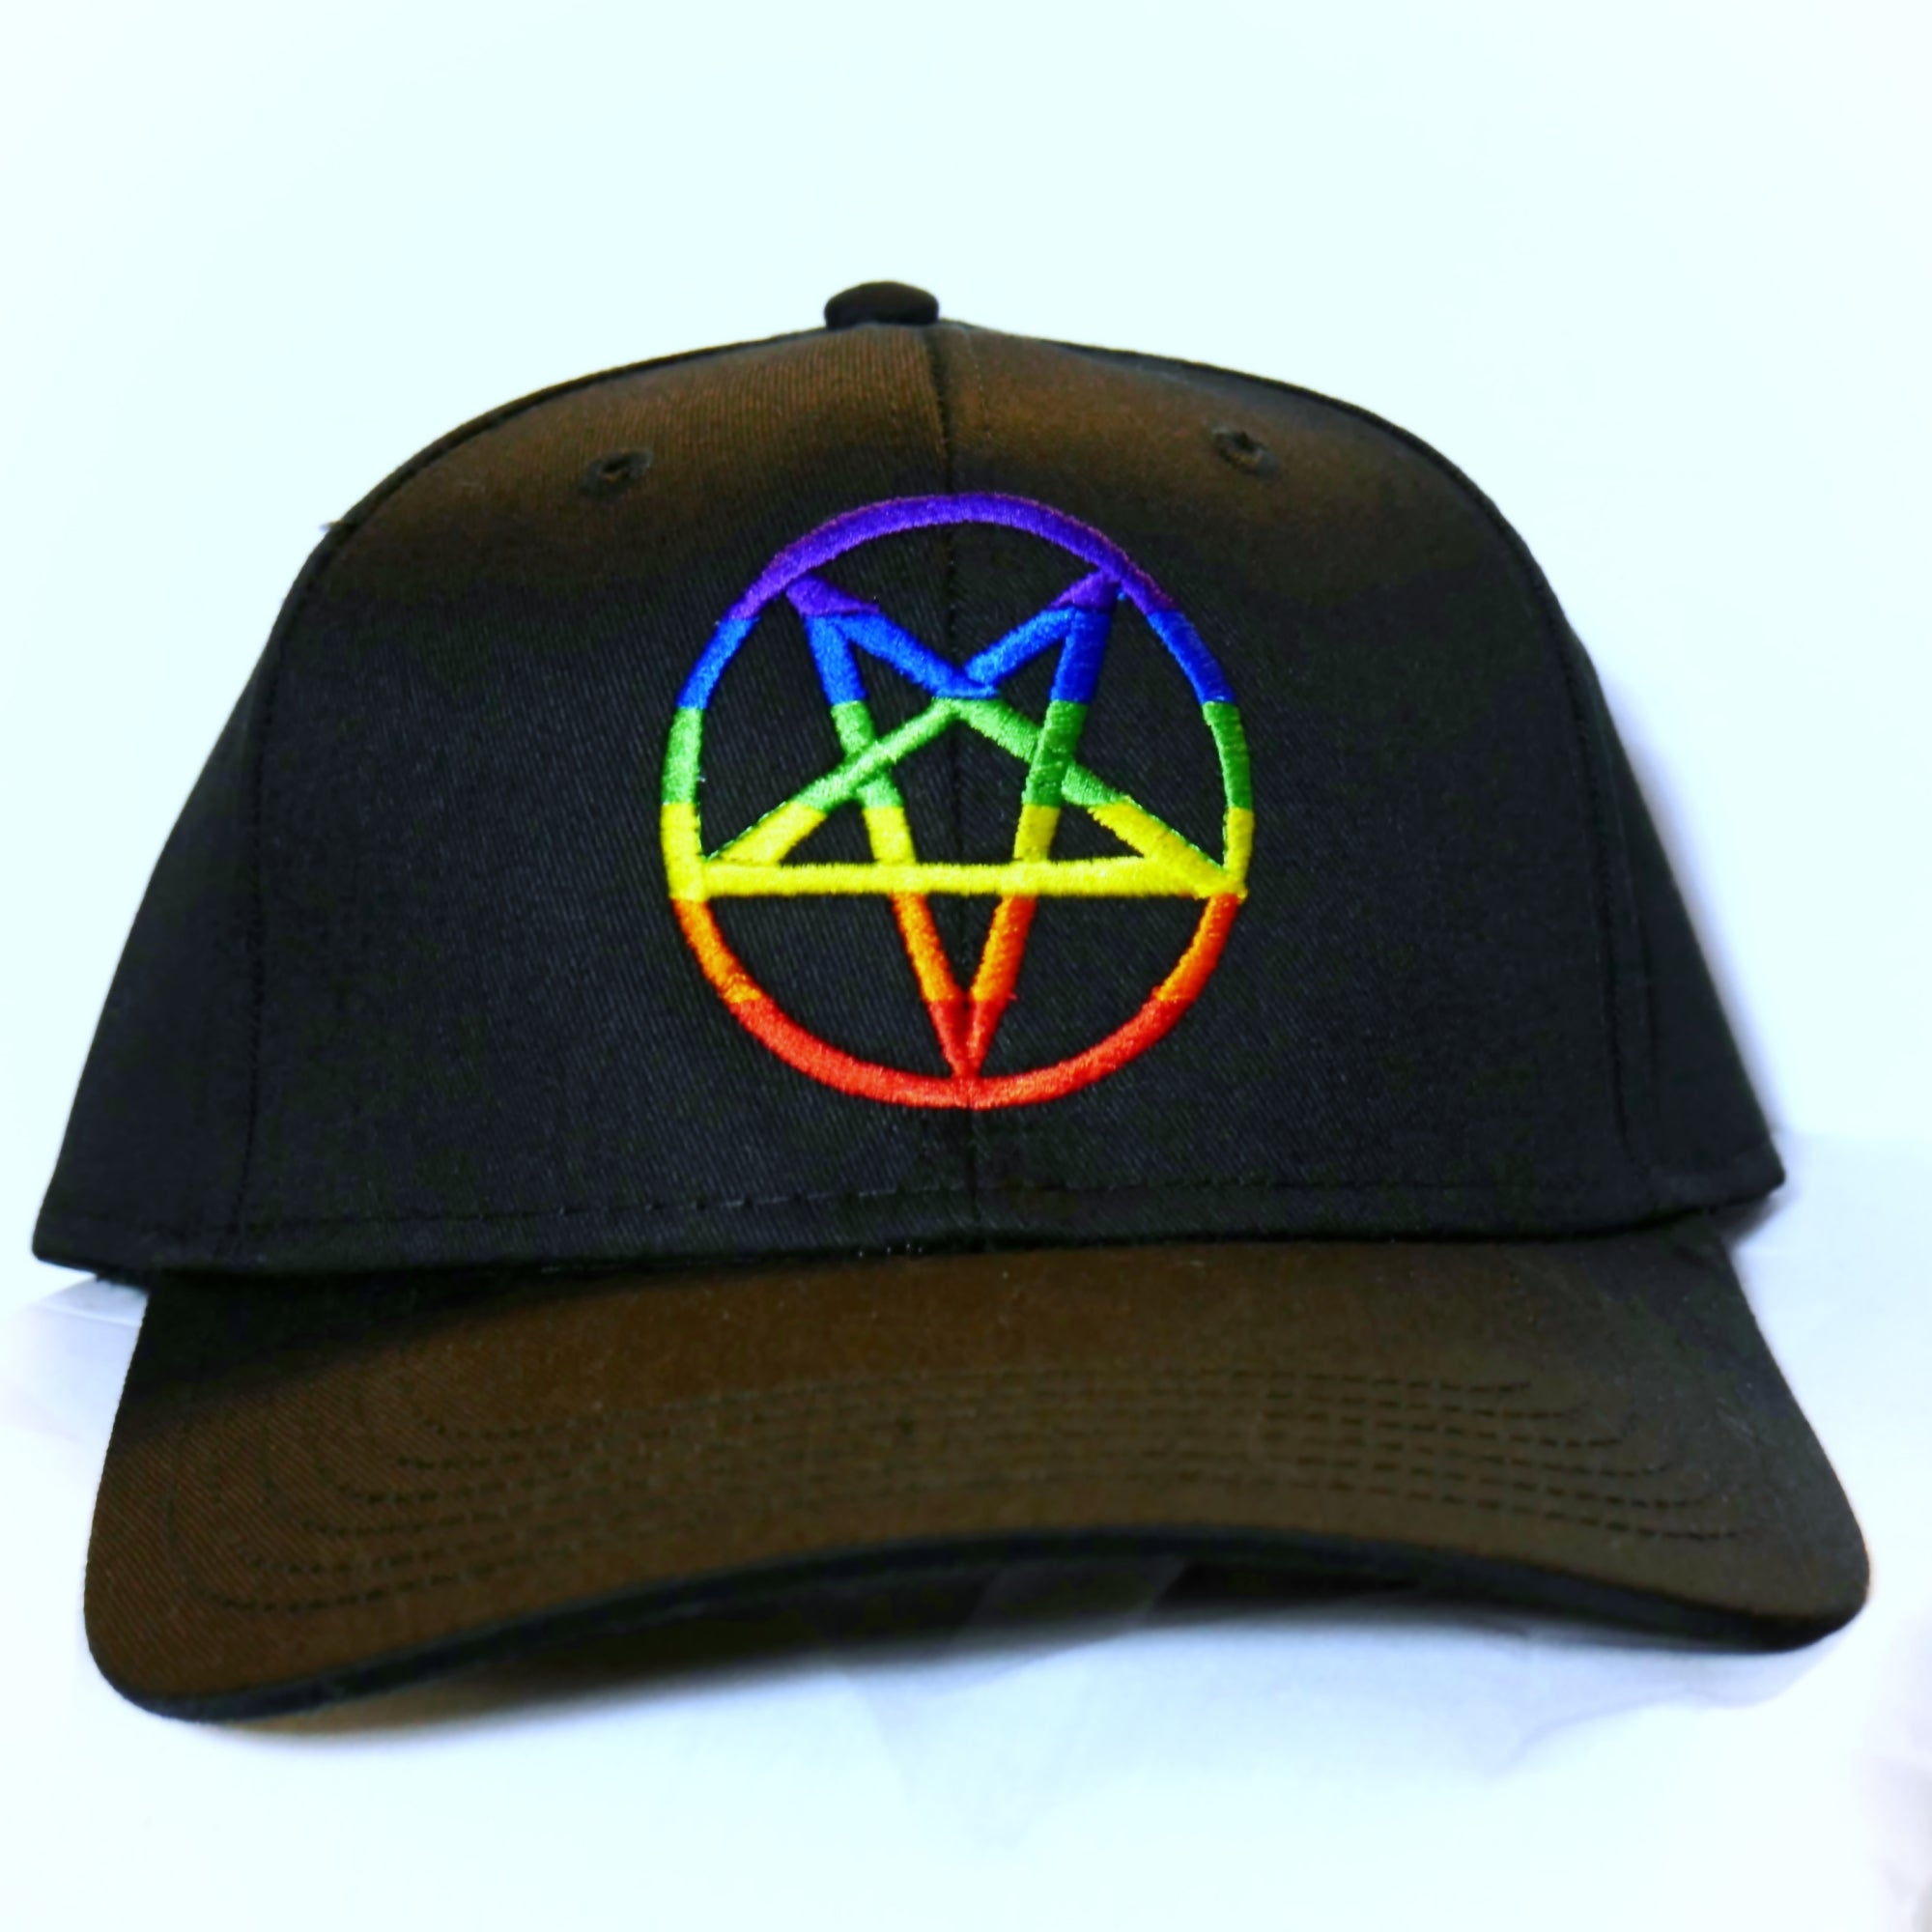 Rainbow Pentagram Hat